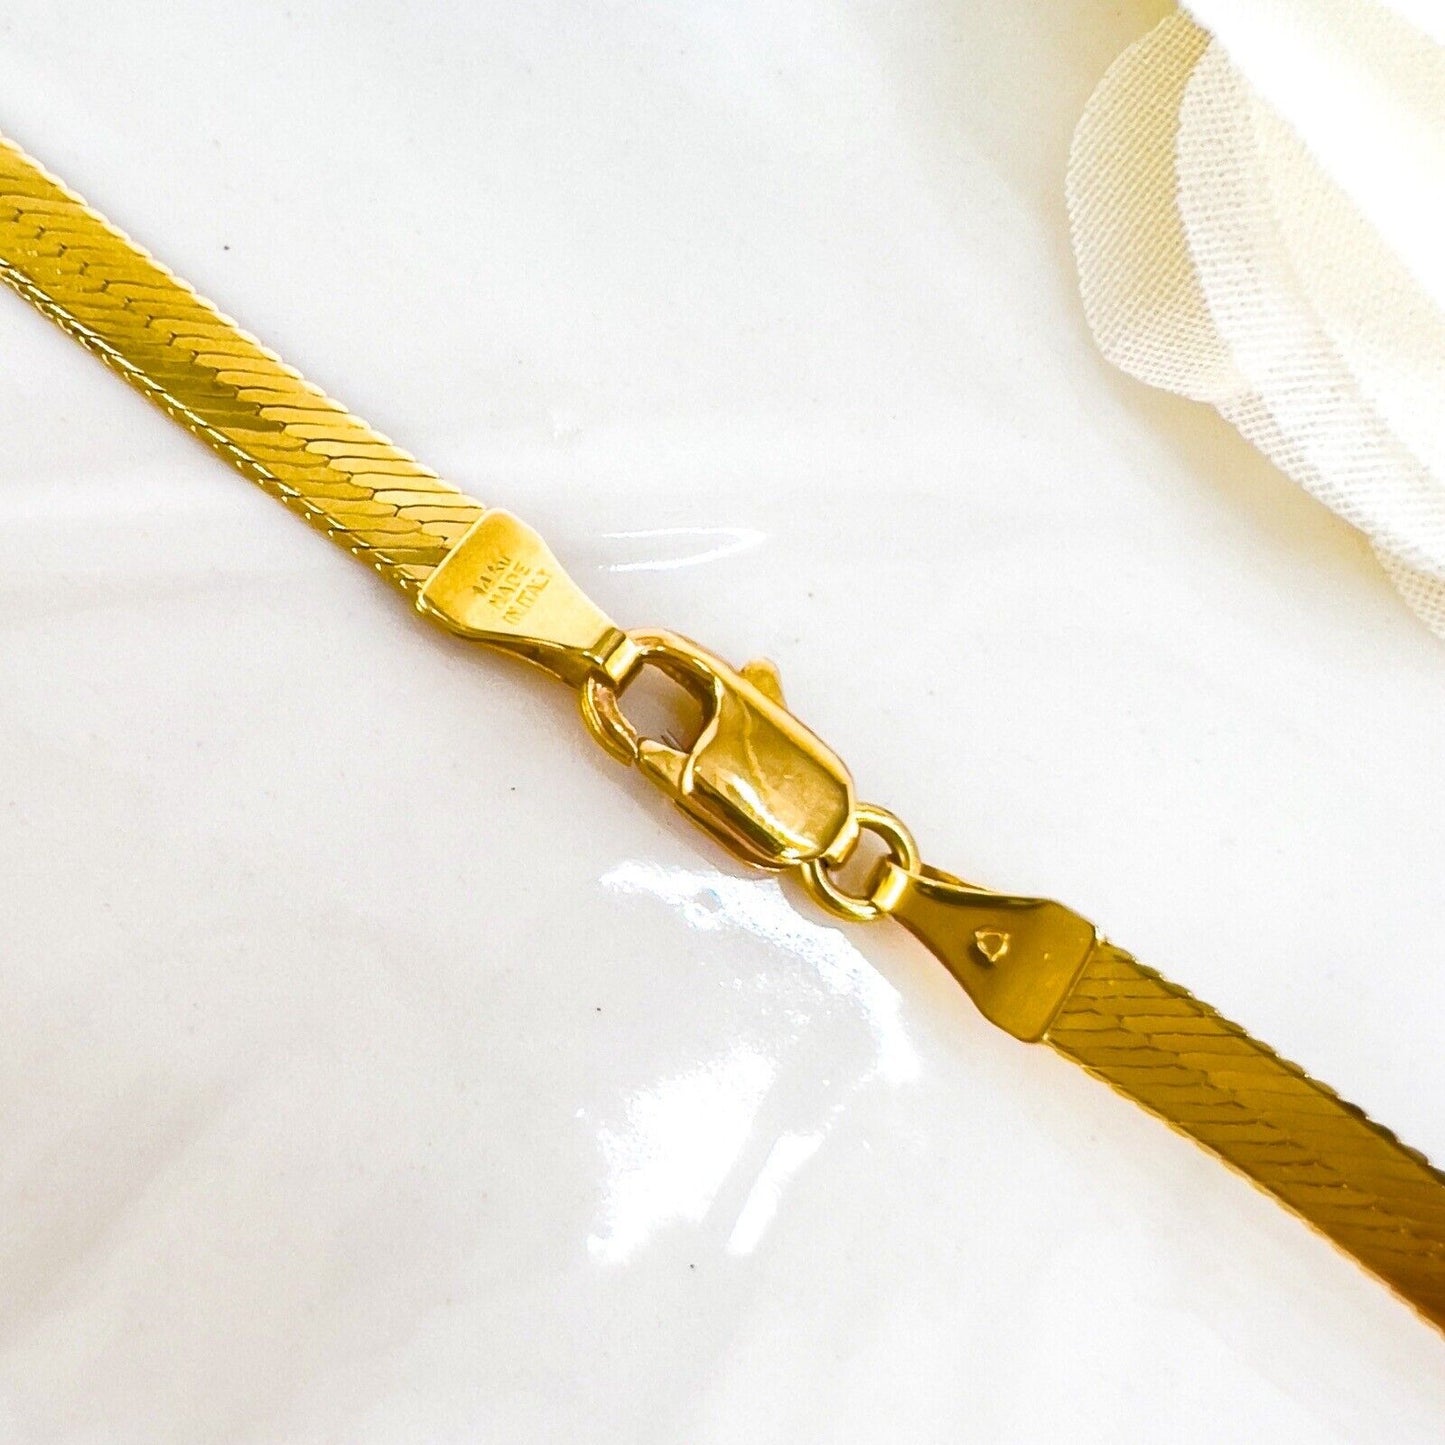 Solid 14k Yellow Gold Herringbone Style Chain, Italy 18"